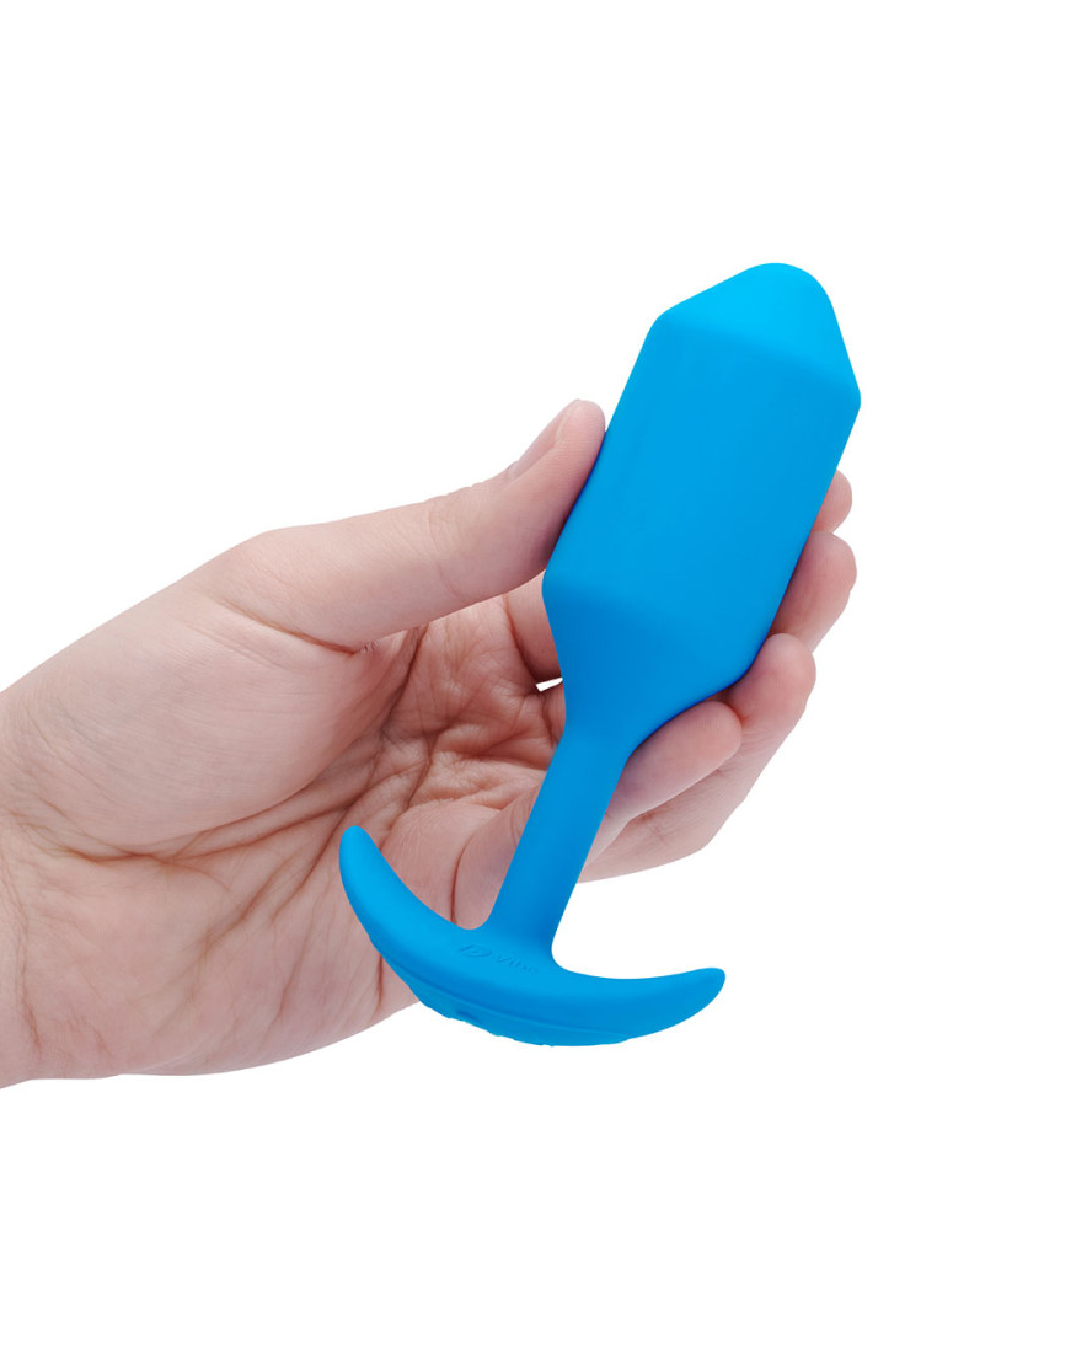 B-Vibe Vibrating Snug Plug 3 (Large) - Blue held in a hand